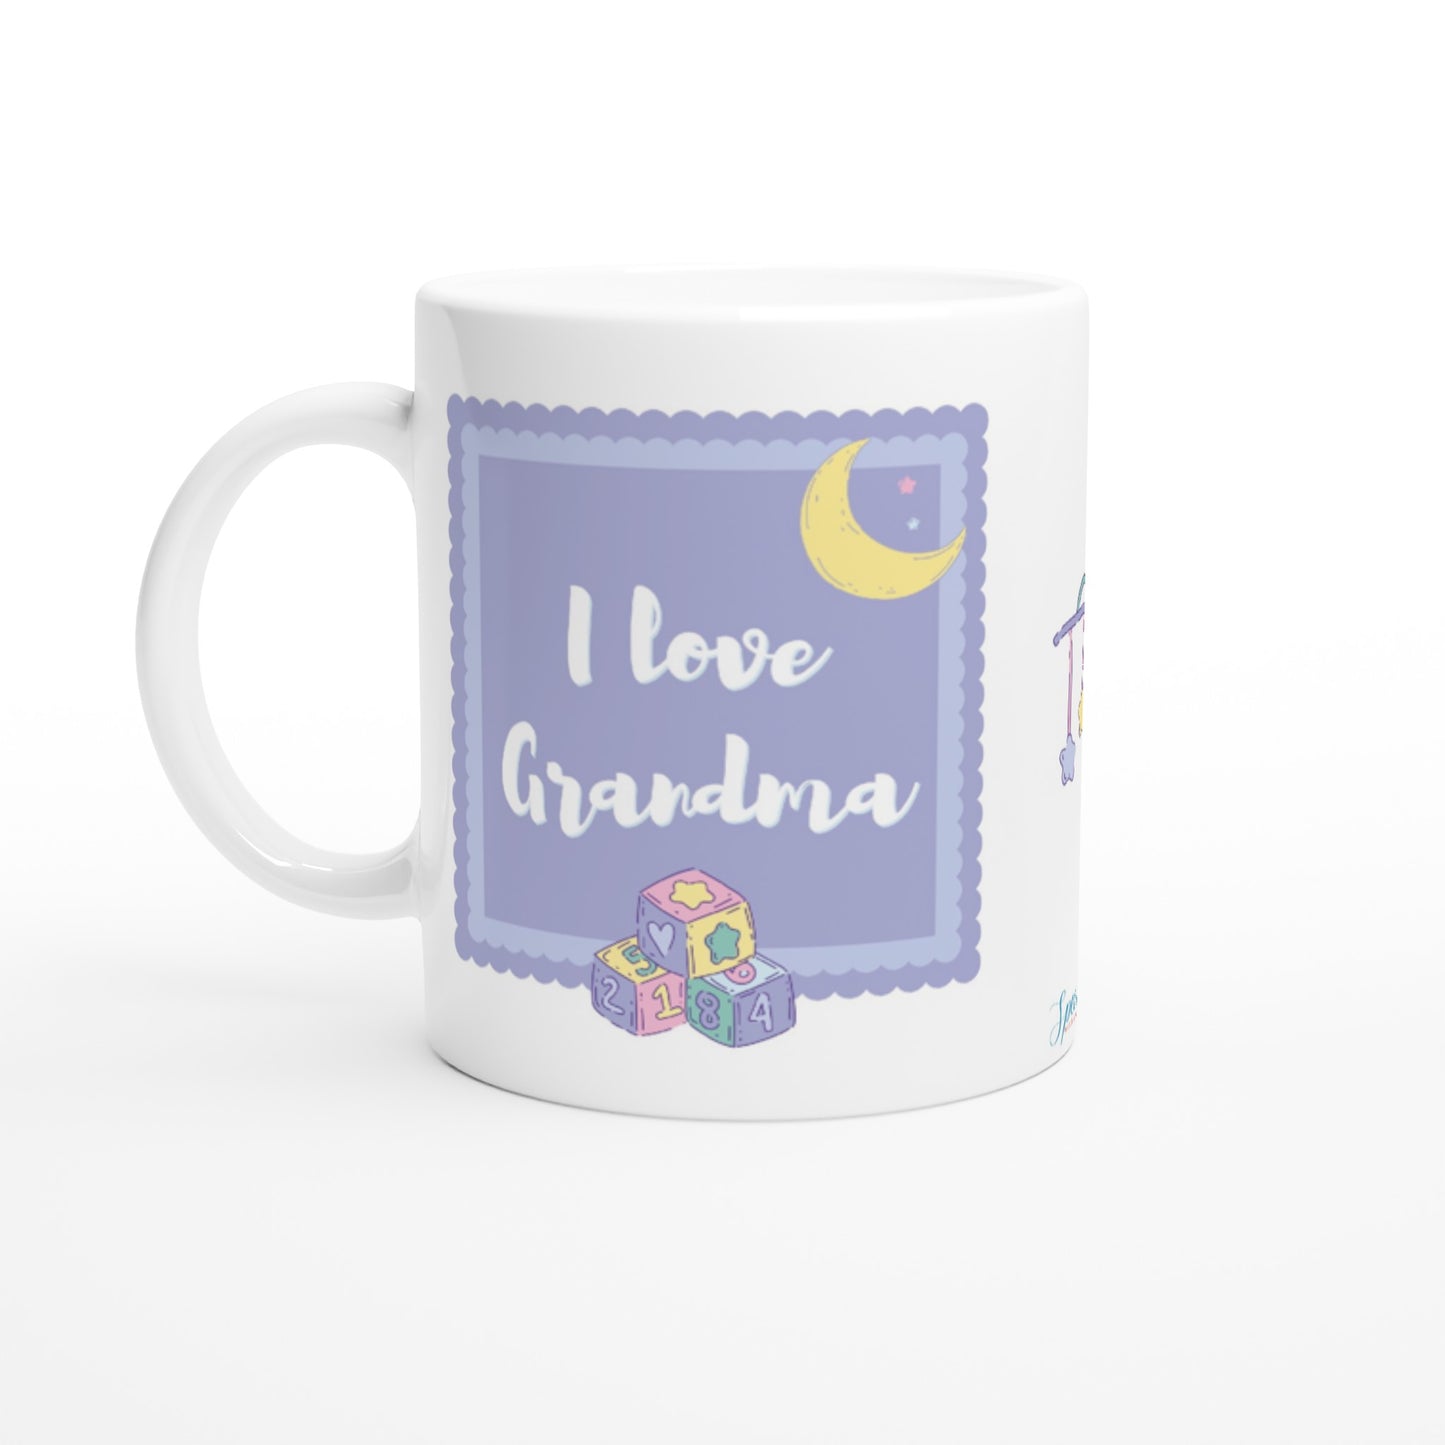 "I Love Grandma" Customizable Photo 11 oz. Mug front view